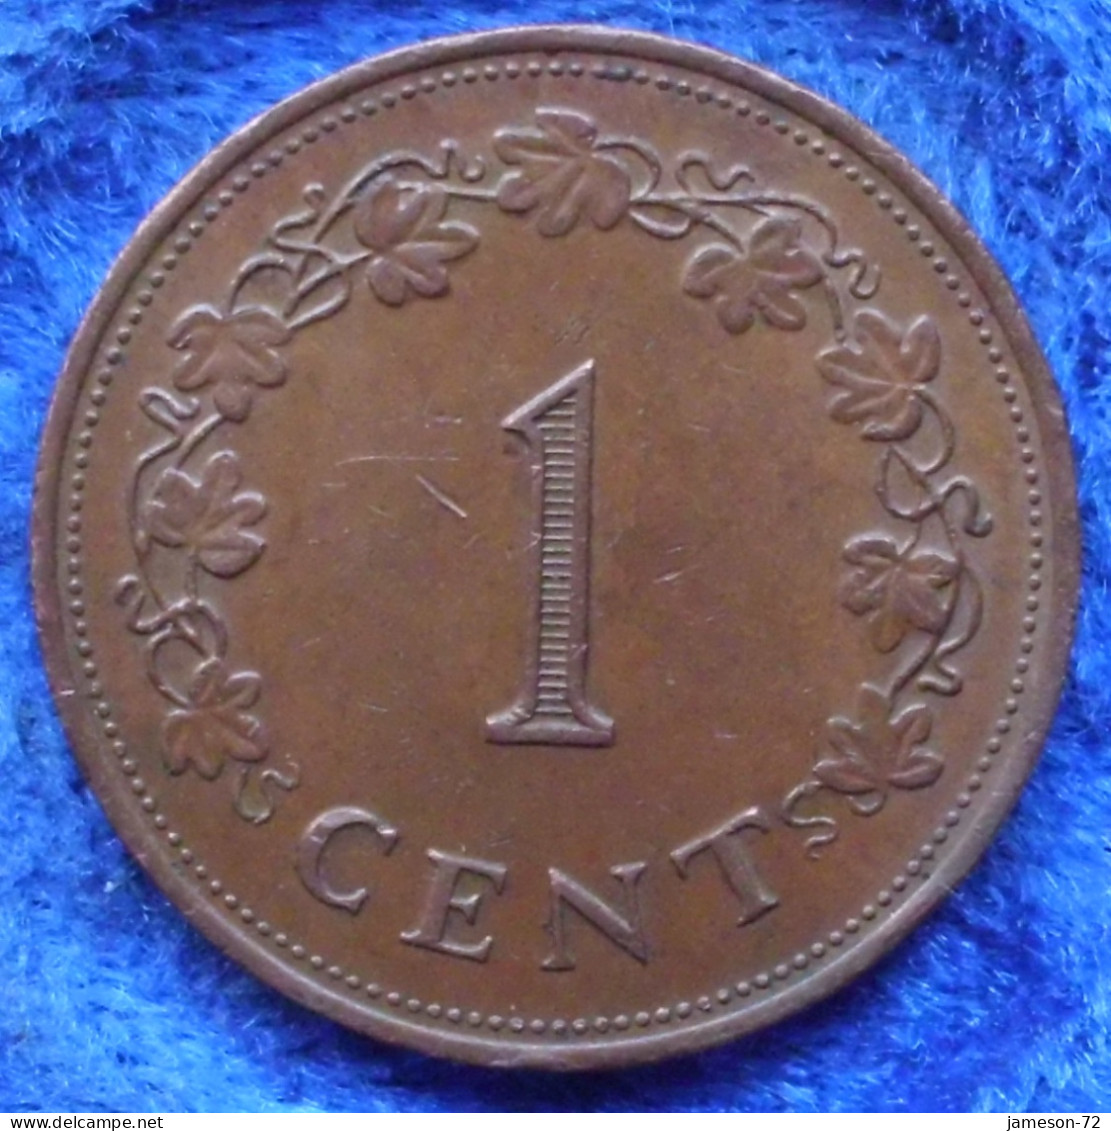 MALTA - 1 Cent 1977 "the George Cross" KM# 8 Republic Since 1964 (recognized 1974) - Edelweiss Coins - Malta